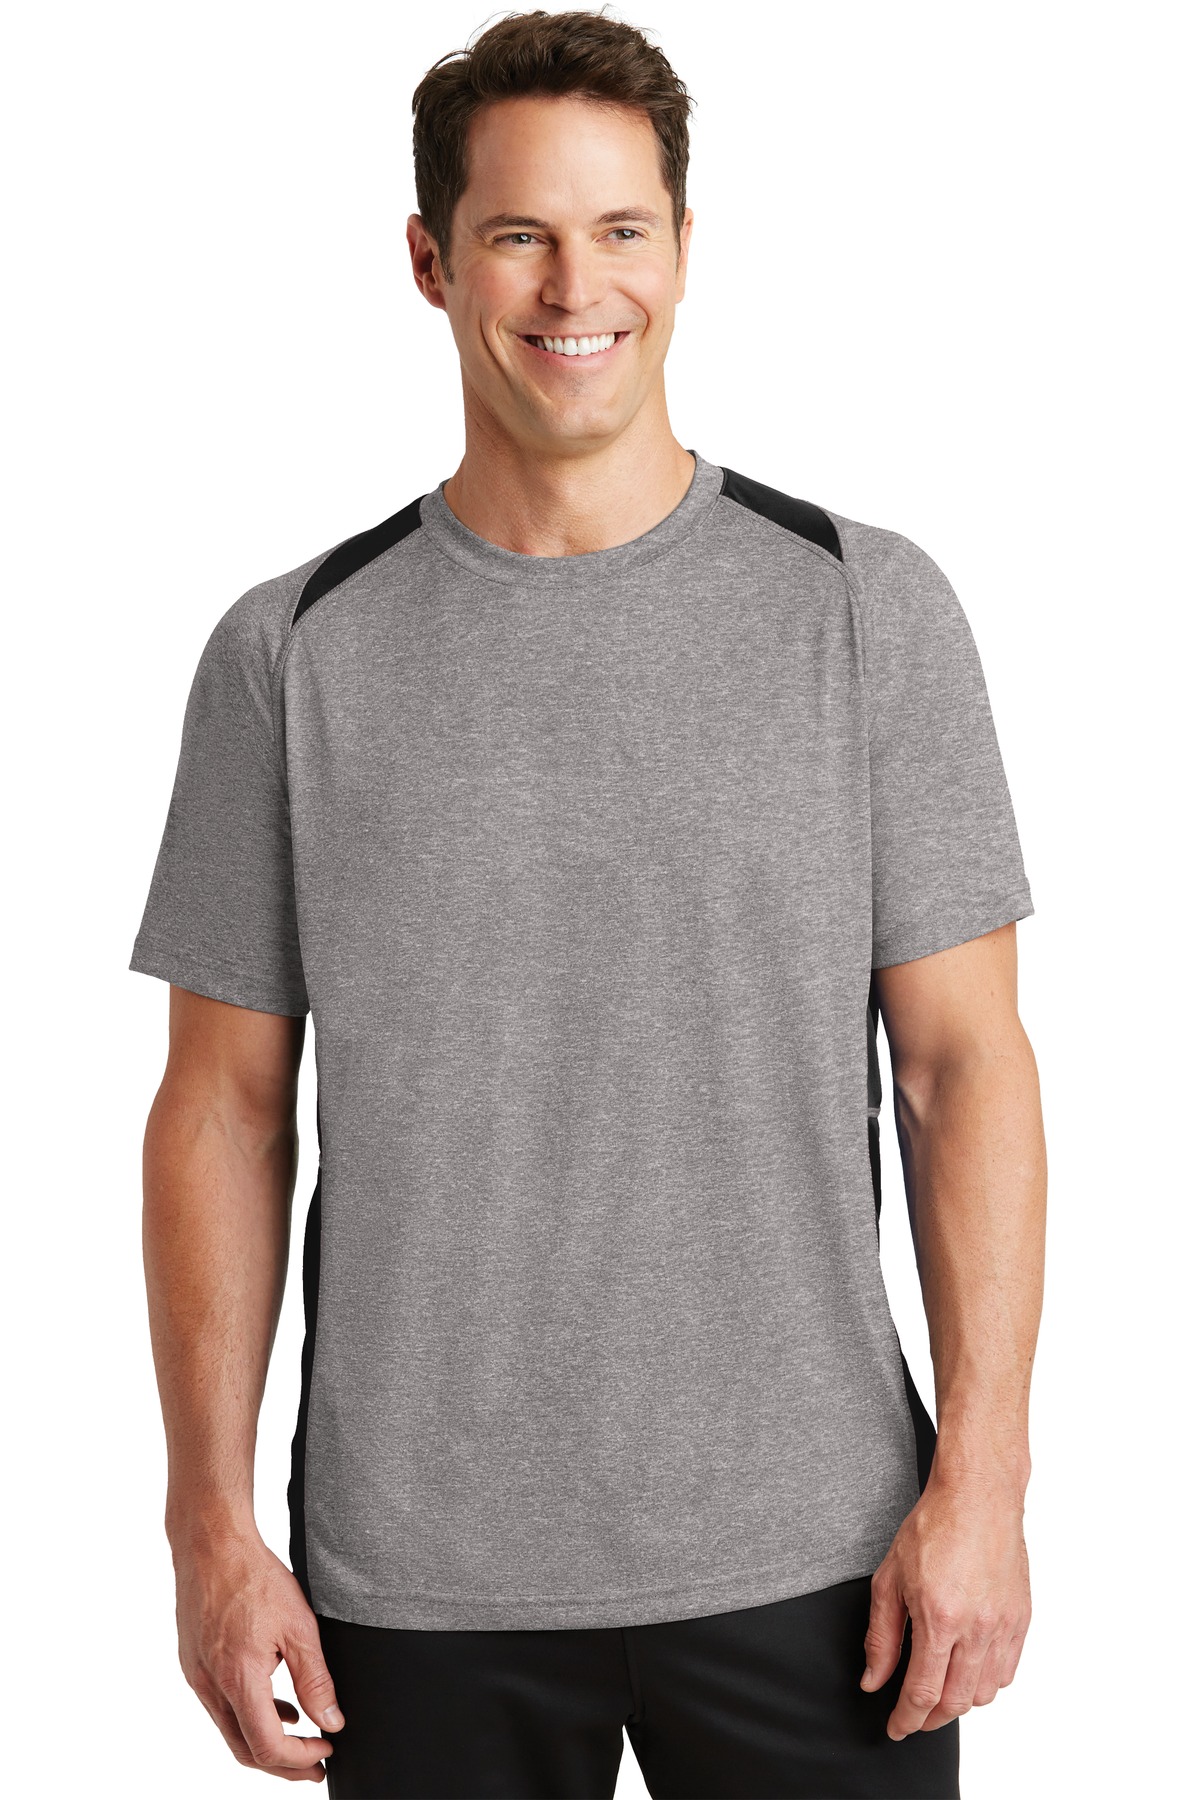 Sport-Tek Activewear T-Shirts for Hospitality ® Heather Colorblock Contender Tee.-Sport-Tek